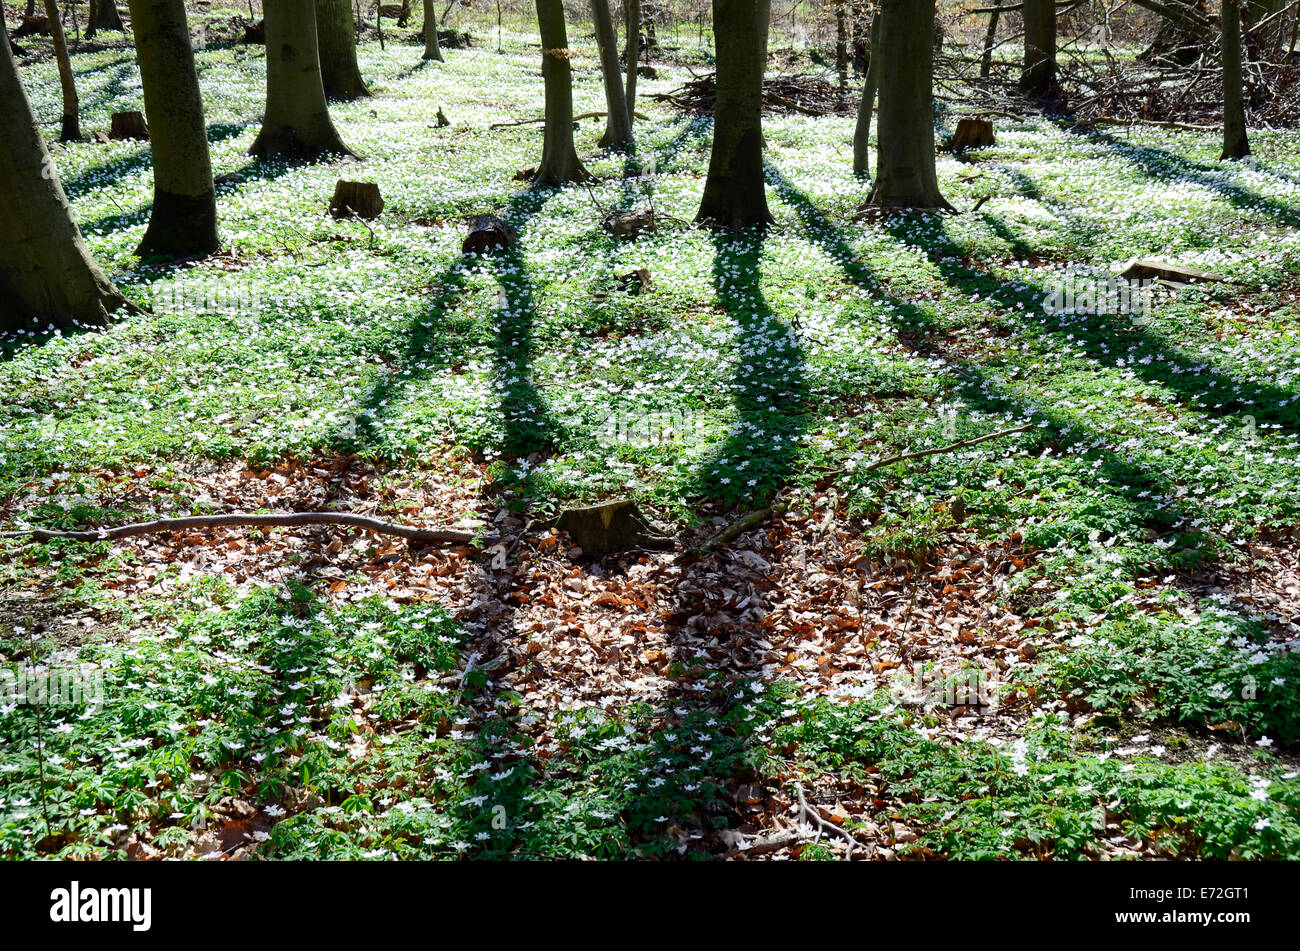 Anemoni in una foresta di faggio - Isola di Ruegen Rügen , Meclemburgo-pomerania Lancken-Granitz Foto Stock